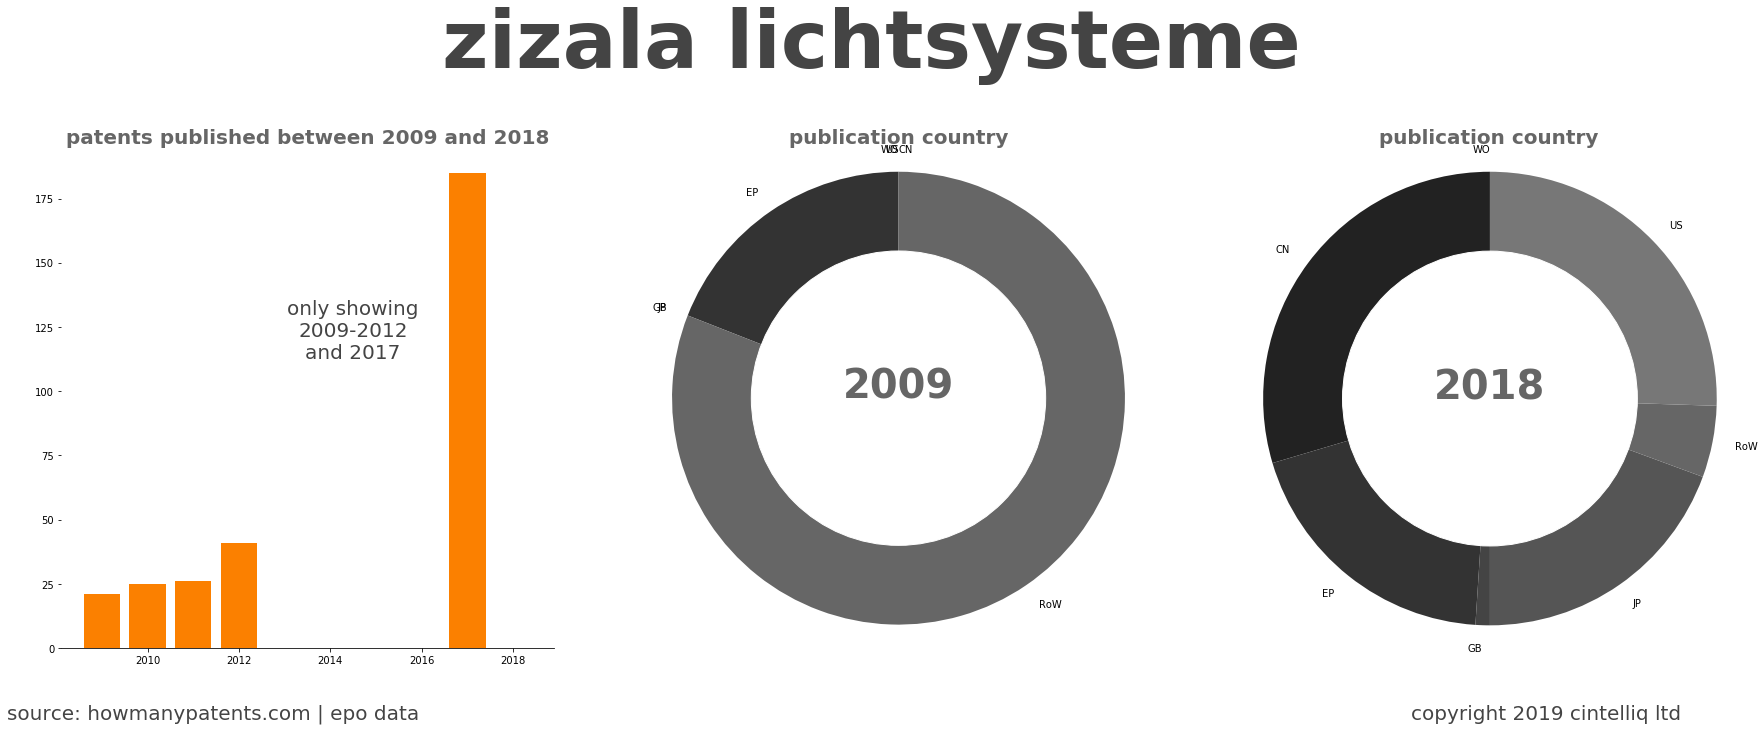 summary of patents for Zizala Lichtsysteme